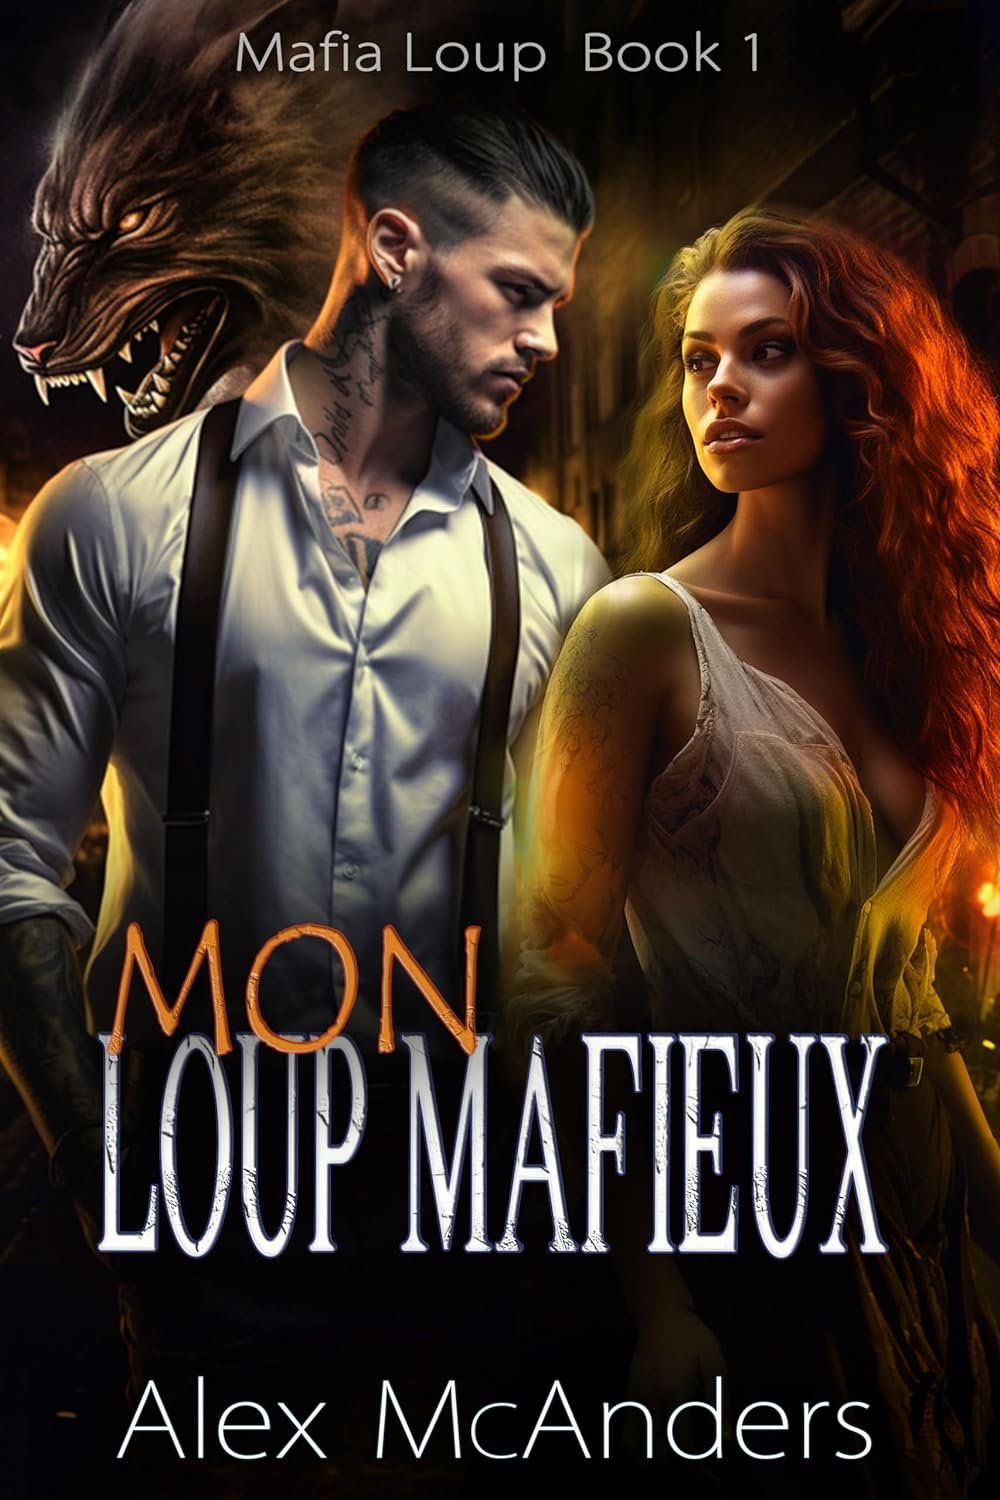 Alex McAnders - Mon Loup Mafieux : Romance Mafieuse d'un Loup-Garou